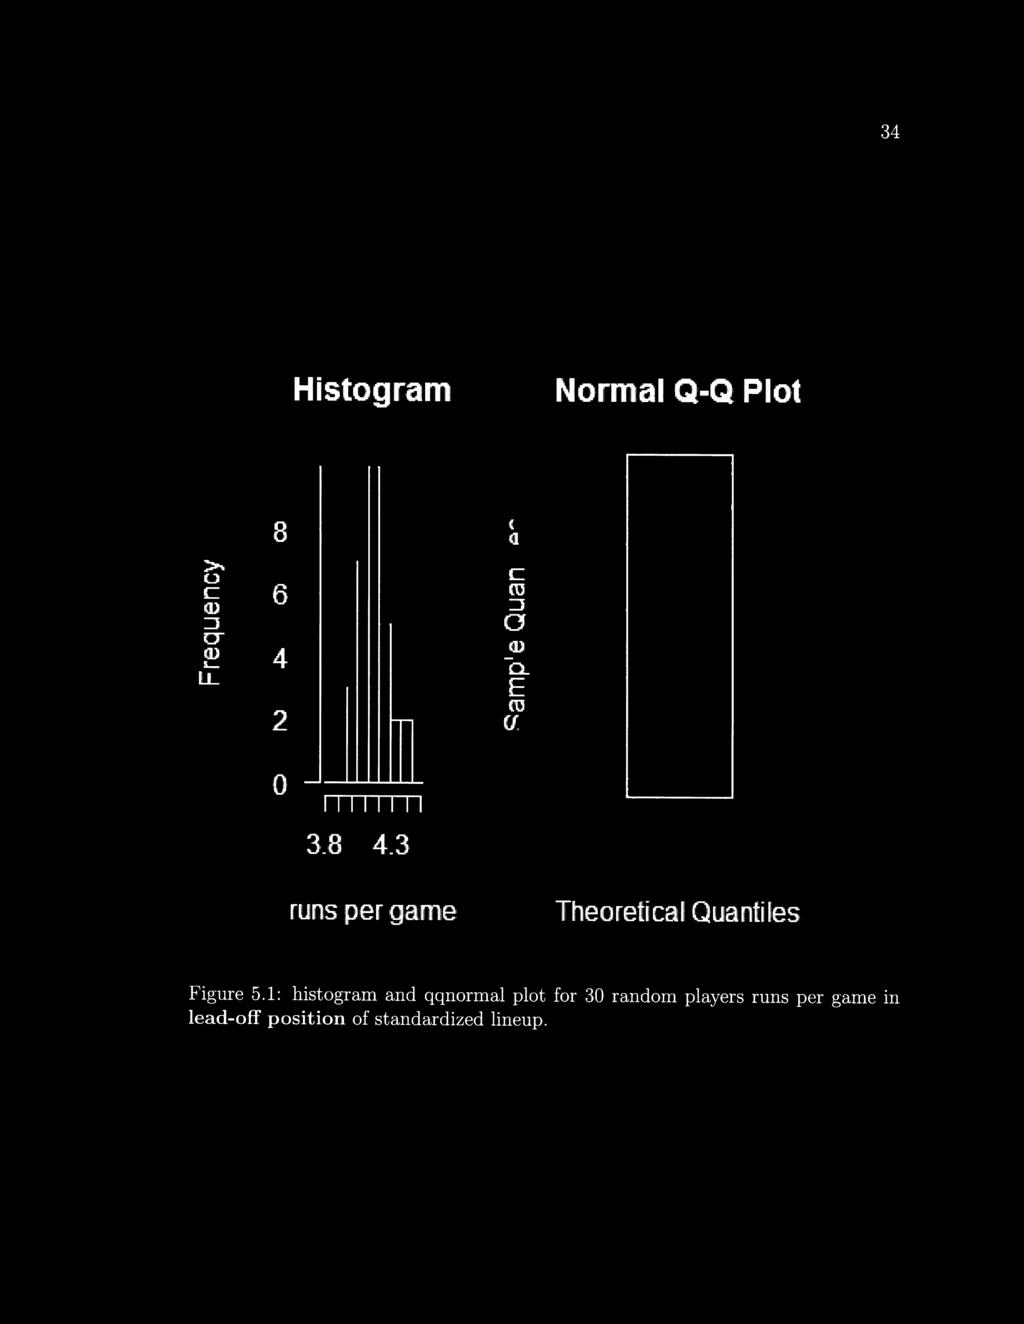 34 Histogram Normal Q-Q Plot Frequency 8 6 4 m iz ks 3 a jd Q. 2 ECO m 0 111111 11 3.8 4.